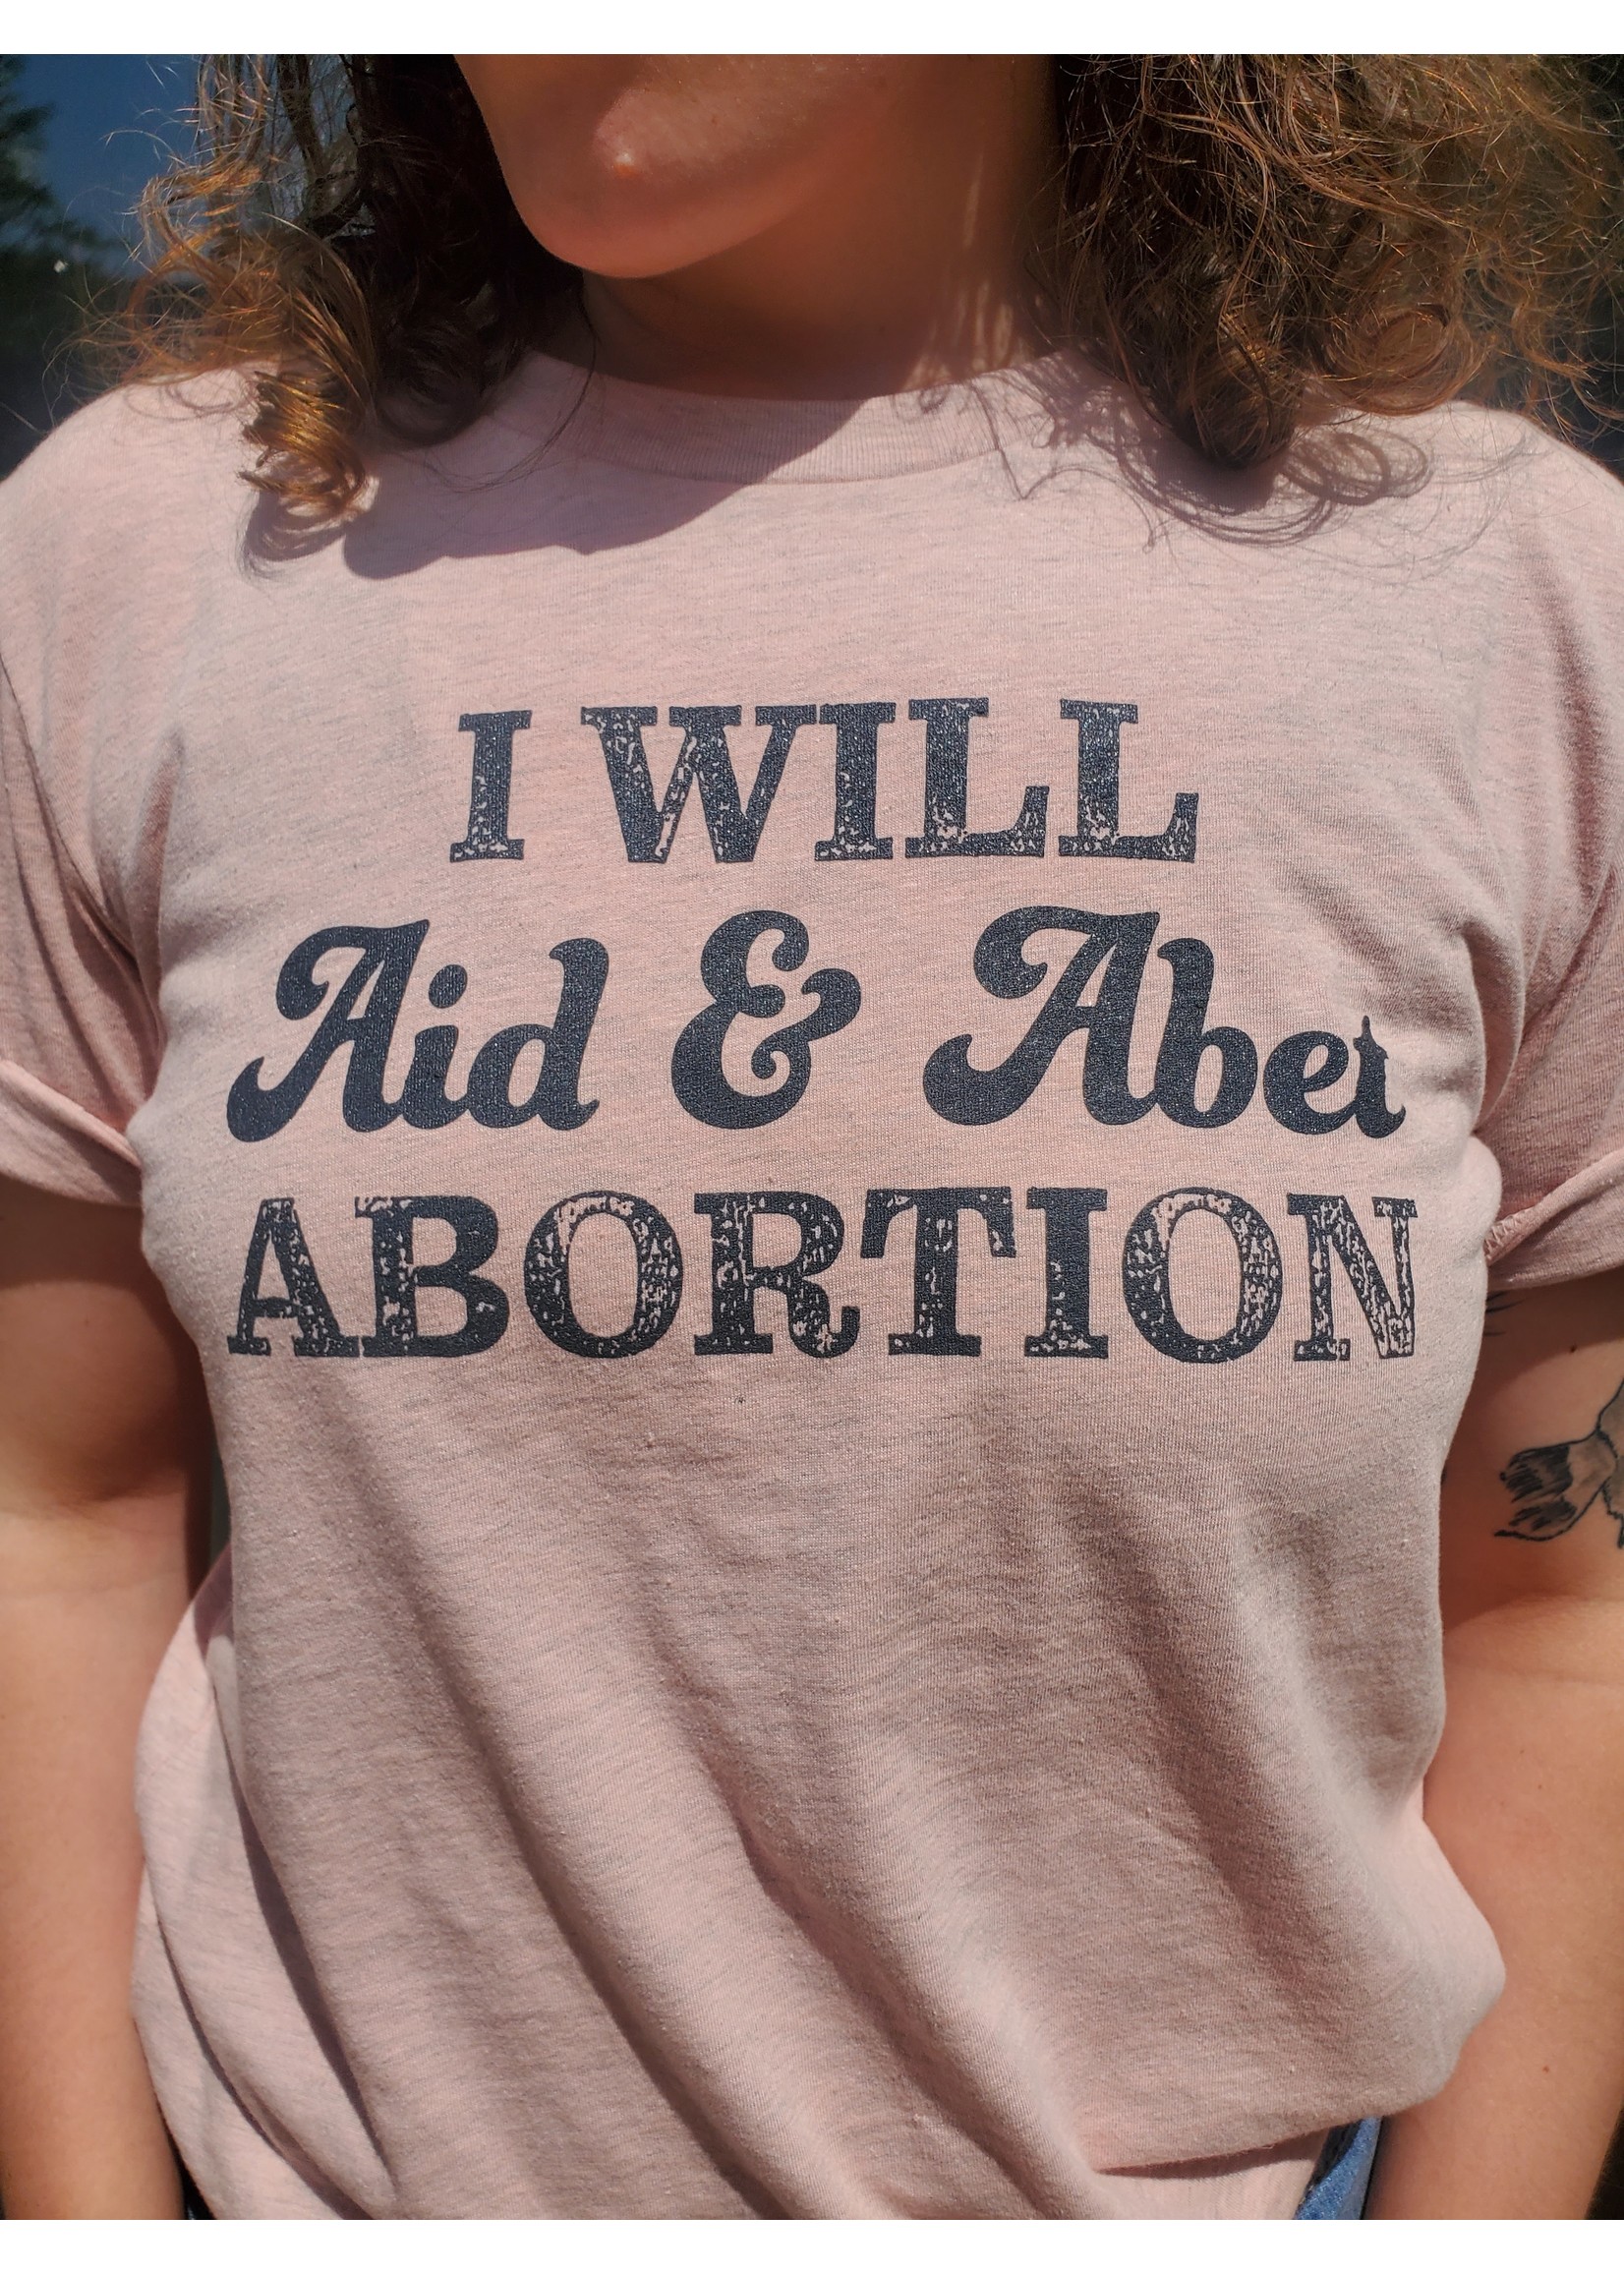 Aid & Abet Abortion T-Shirt